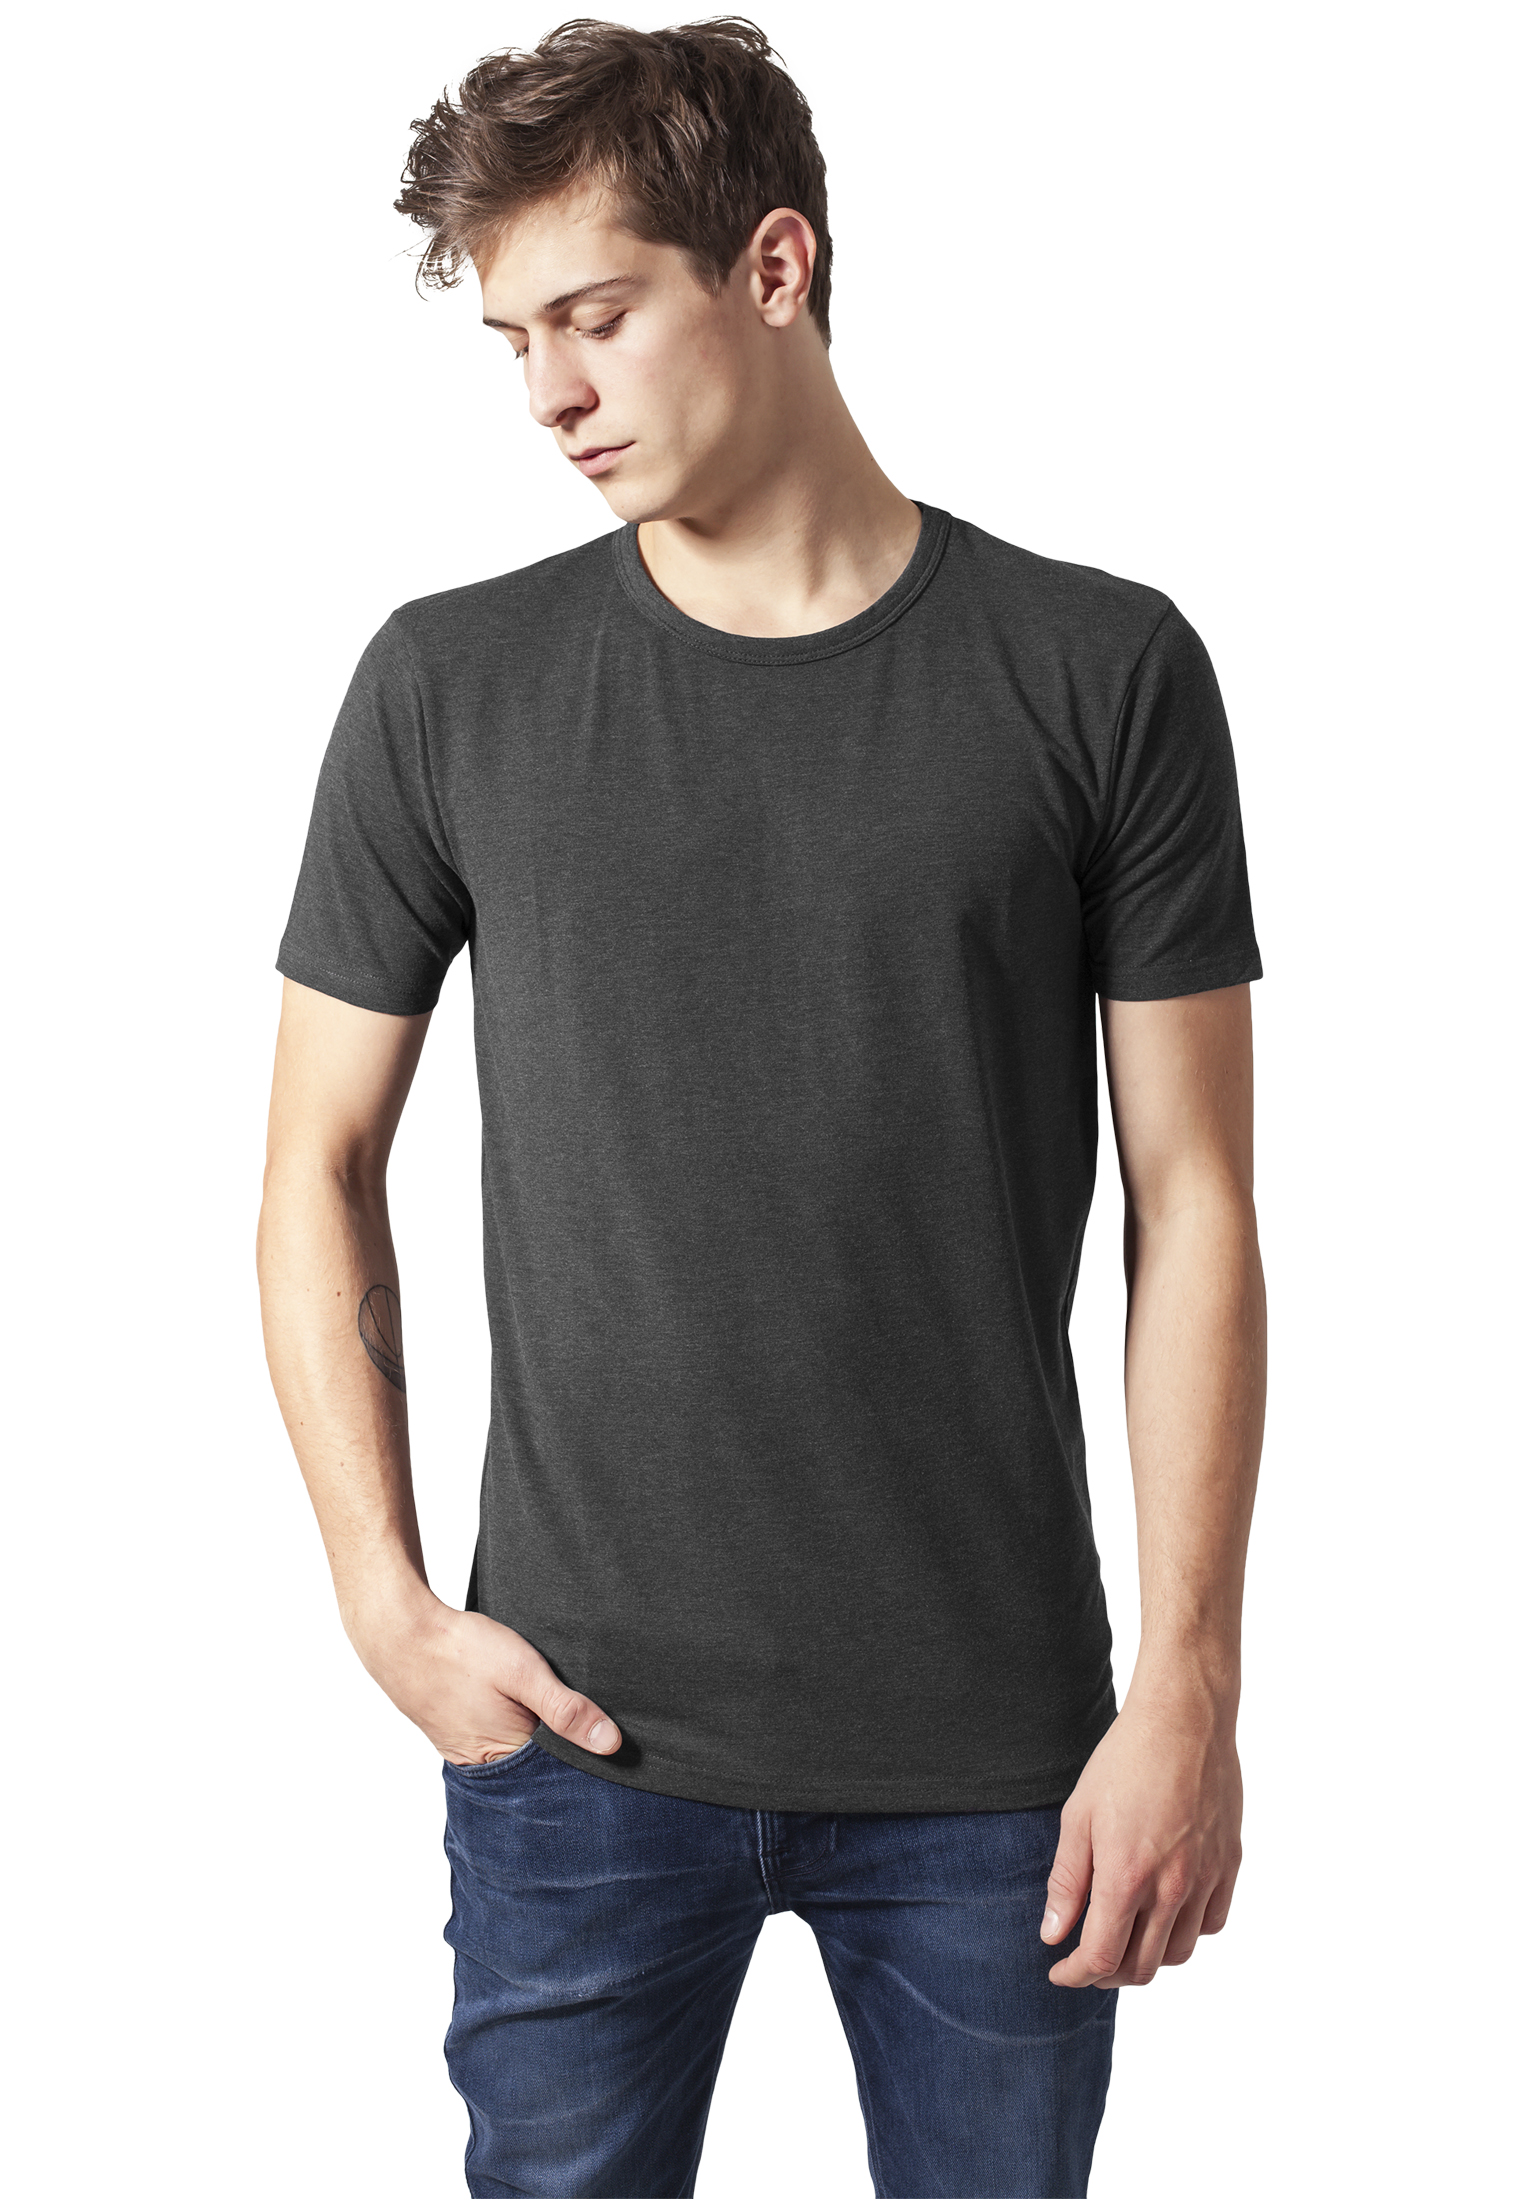 Koop Urban Classics 'Fitted Stretch' T-shirt - Charcoal